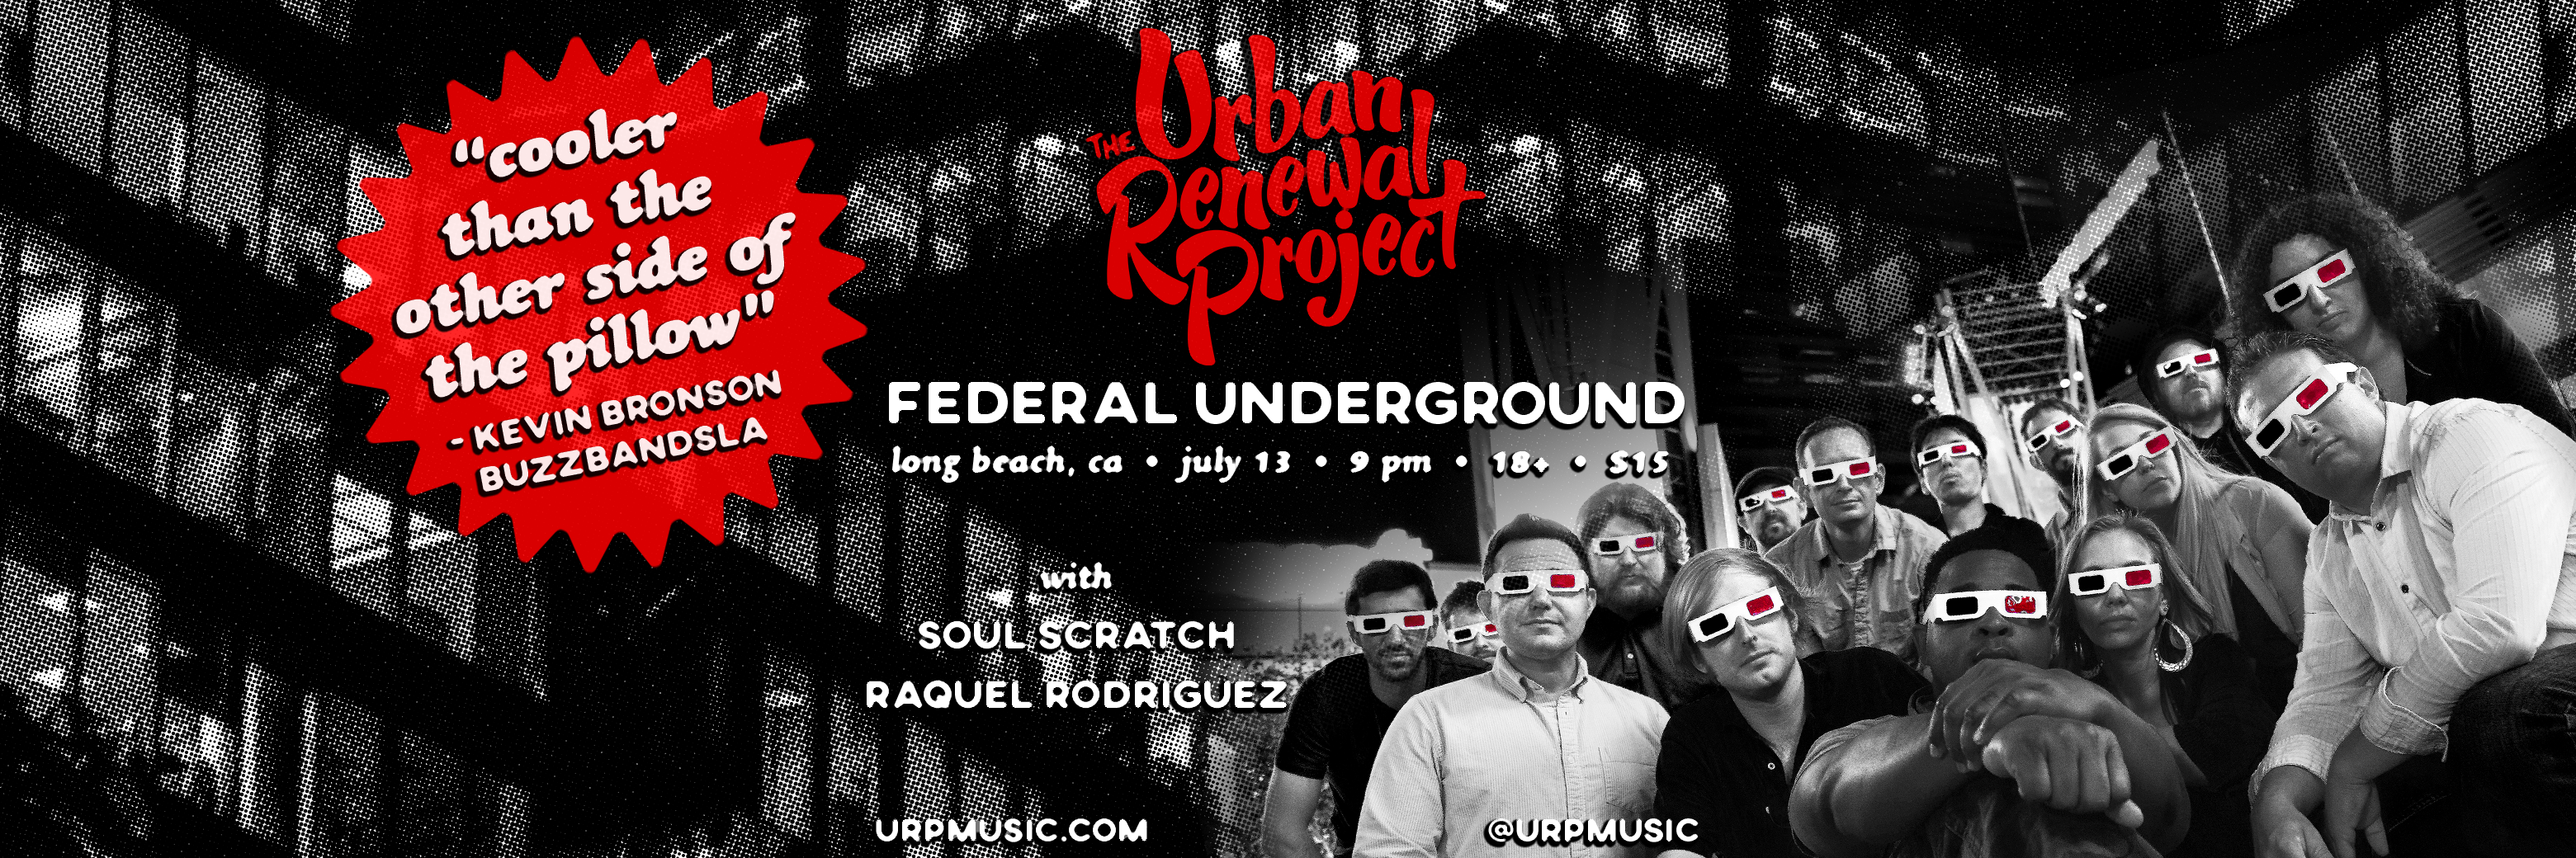 Urban Renewal Project Federal Underground Long Beach banner